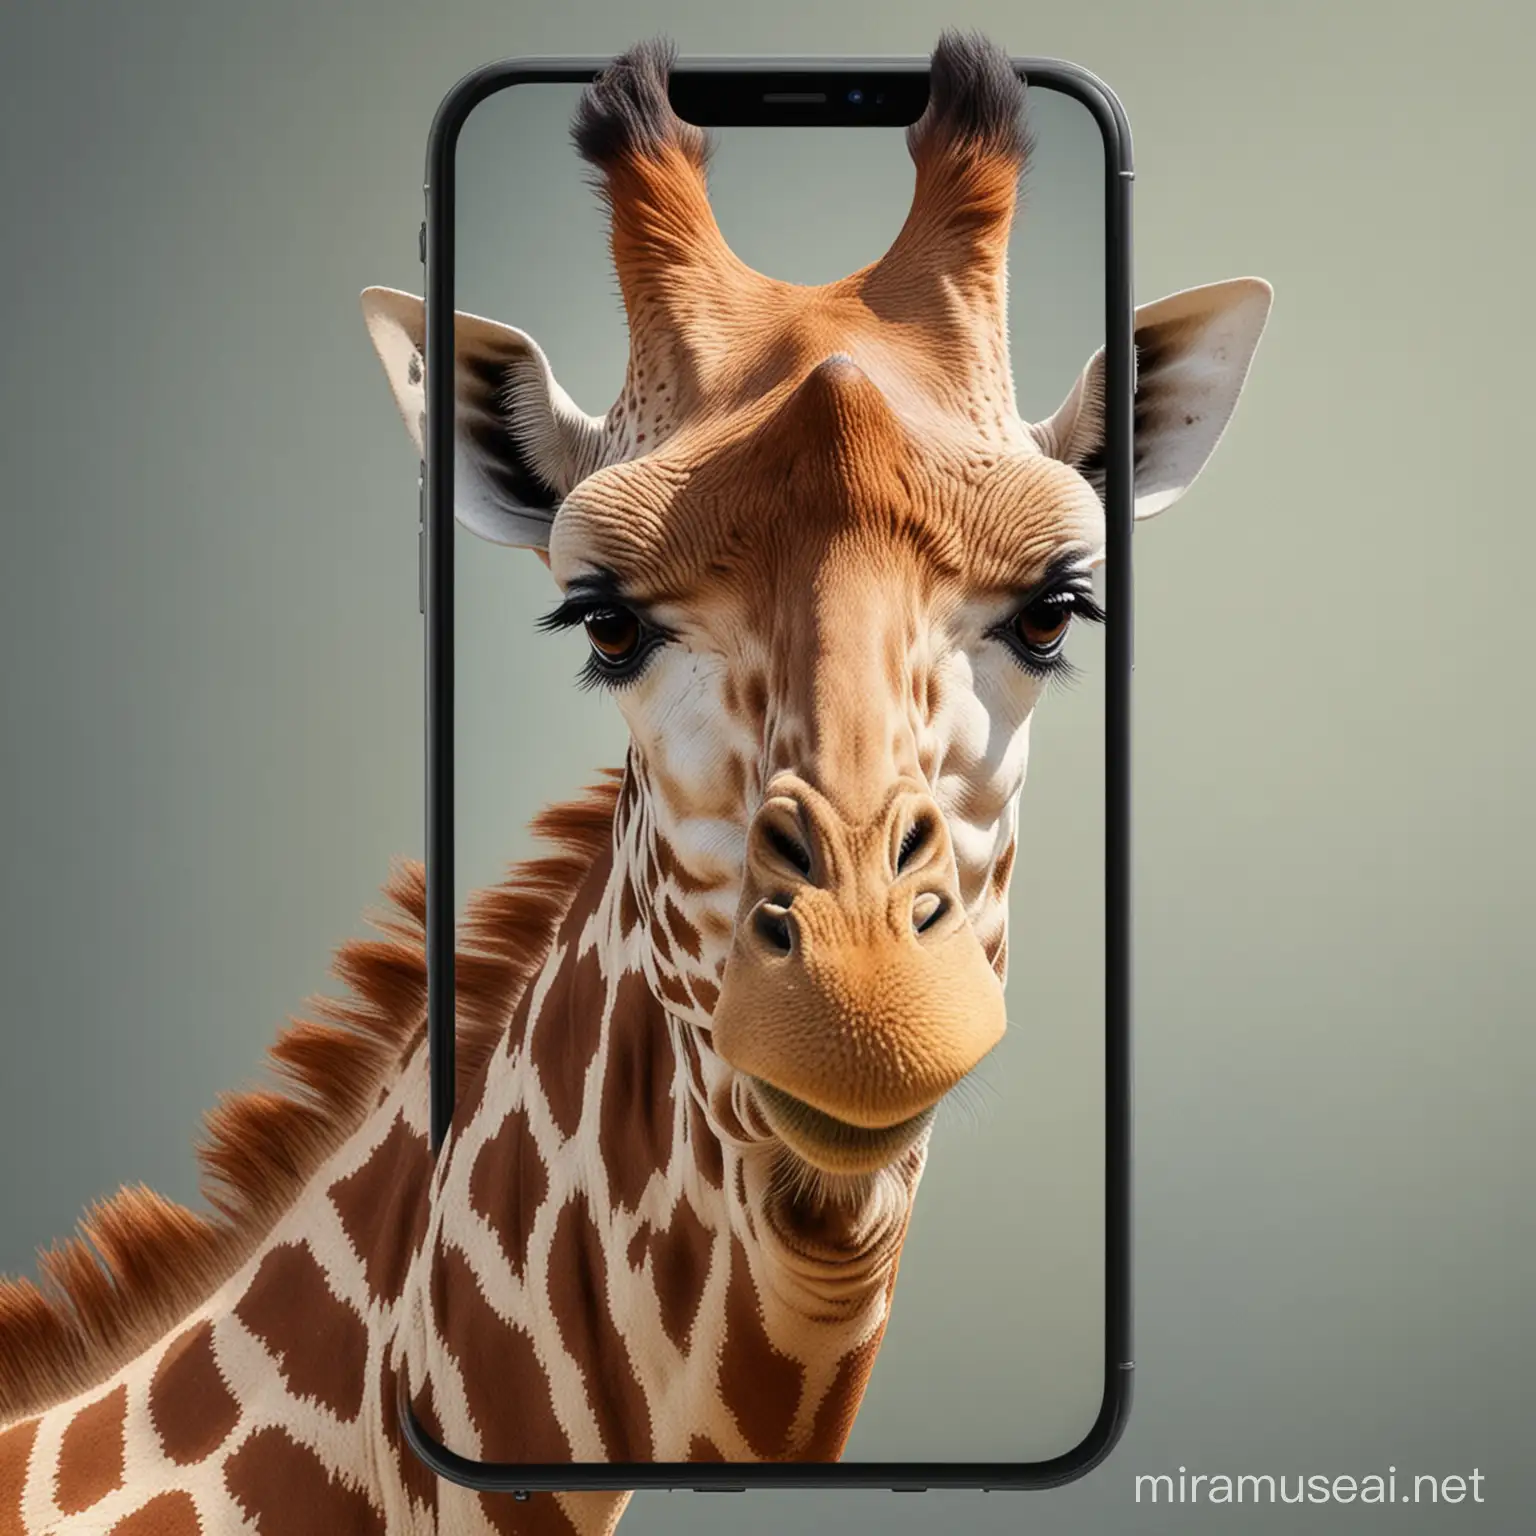 Giraffe Face on Phone Realistic Wildlife Digital Art